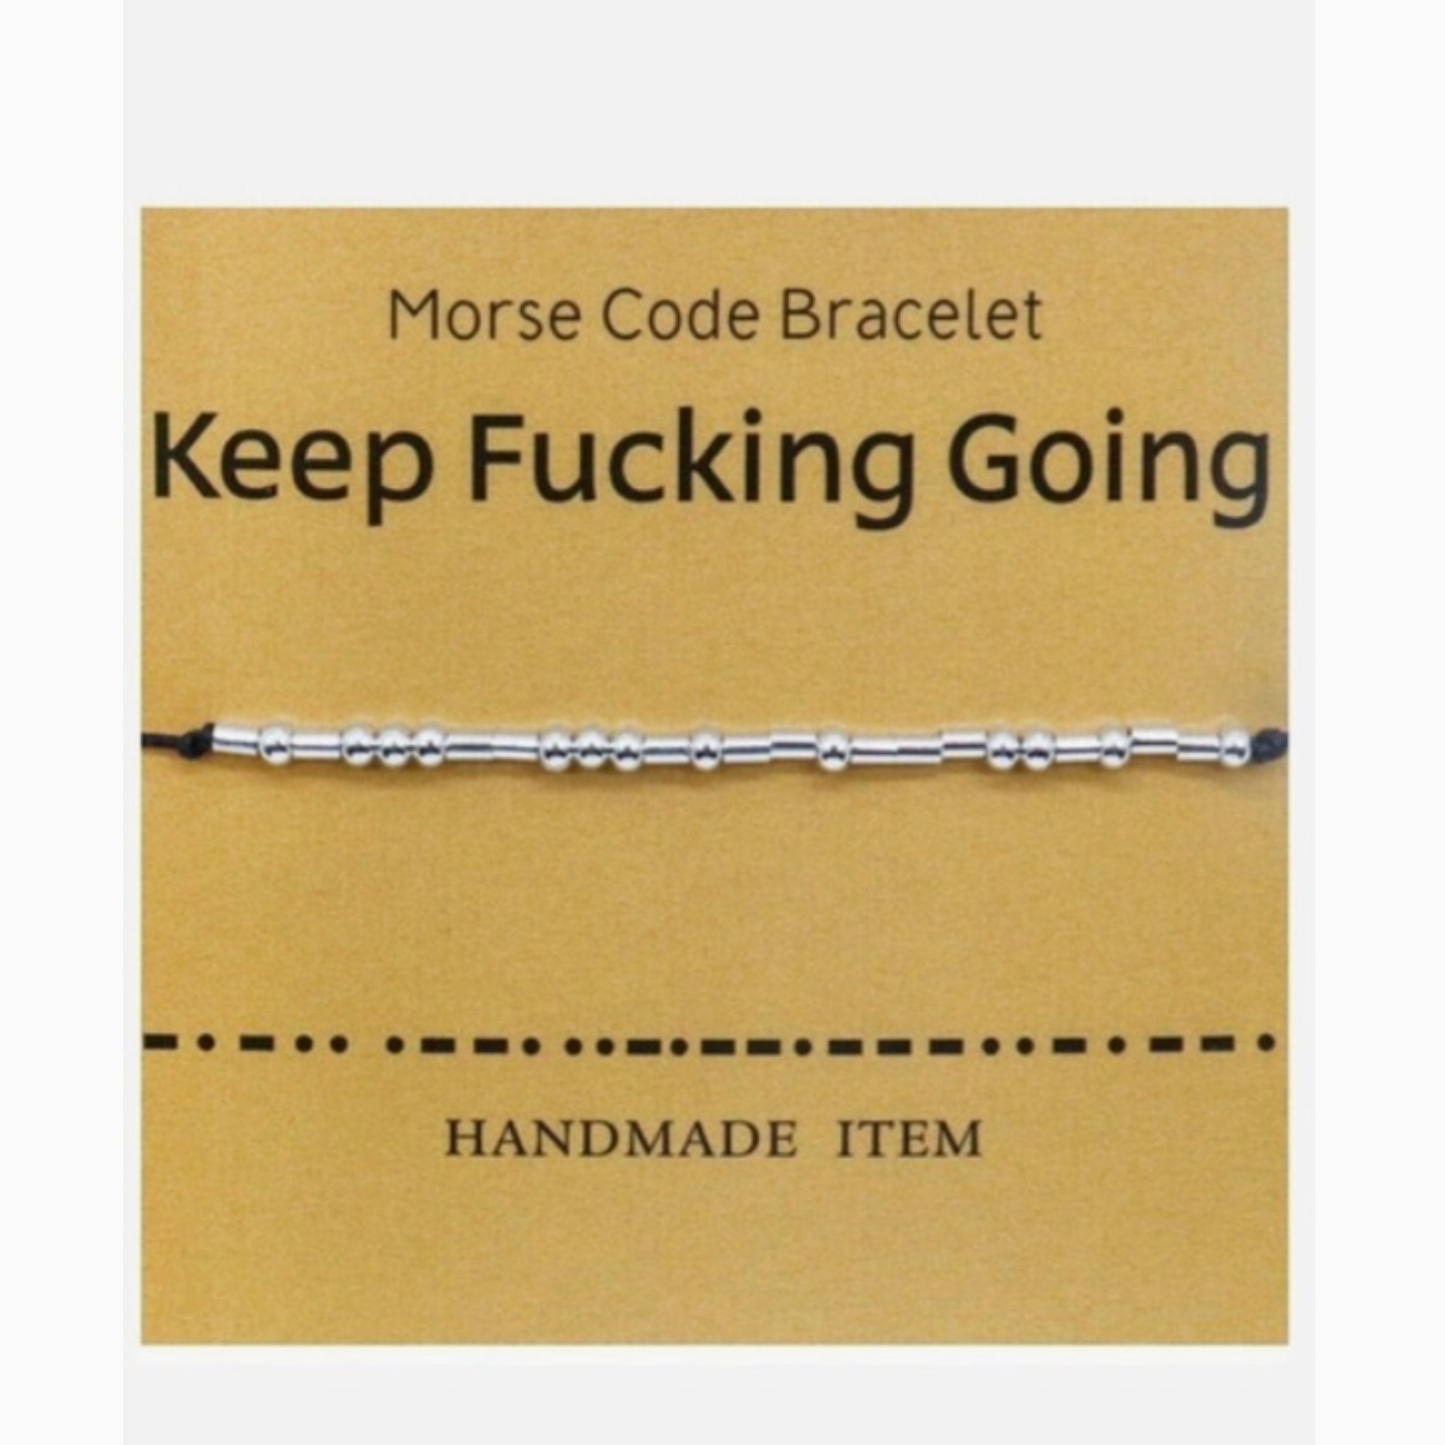 Keep Fucking Going - Morse Code Bracelet